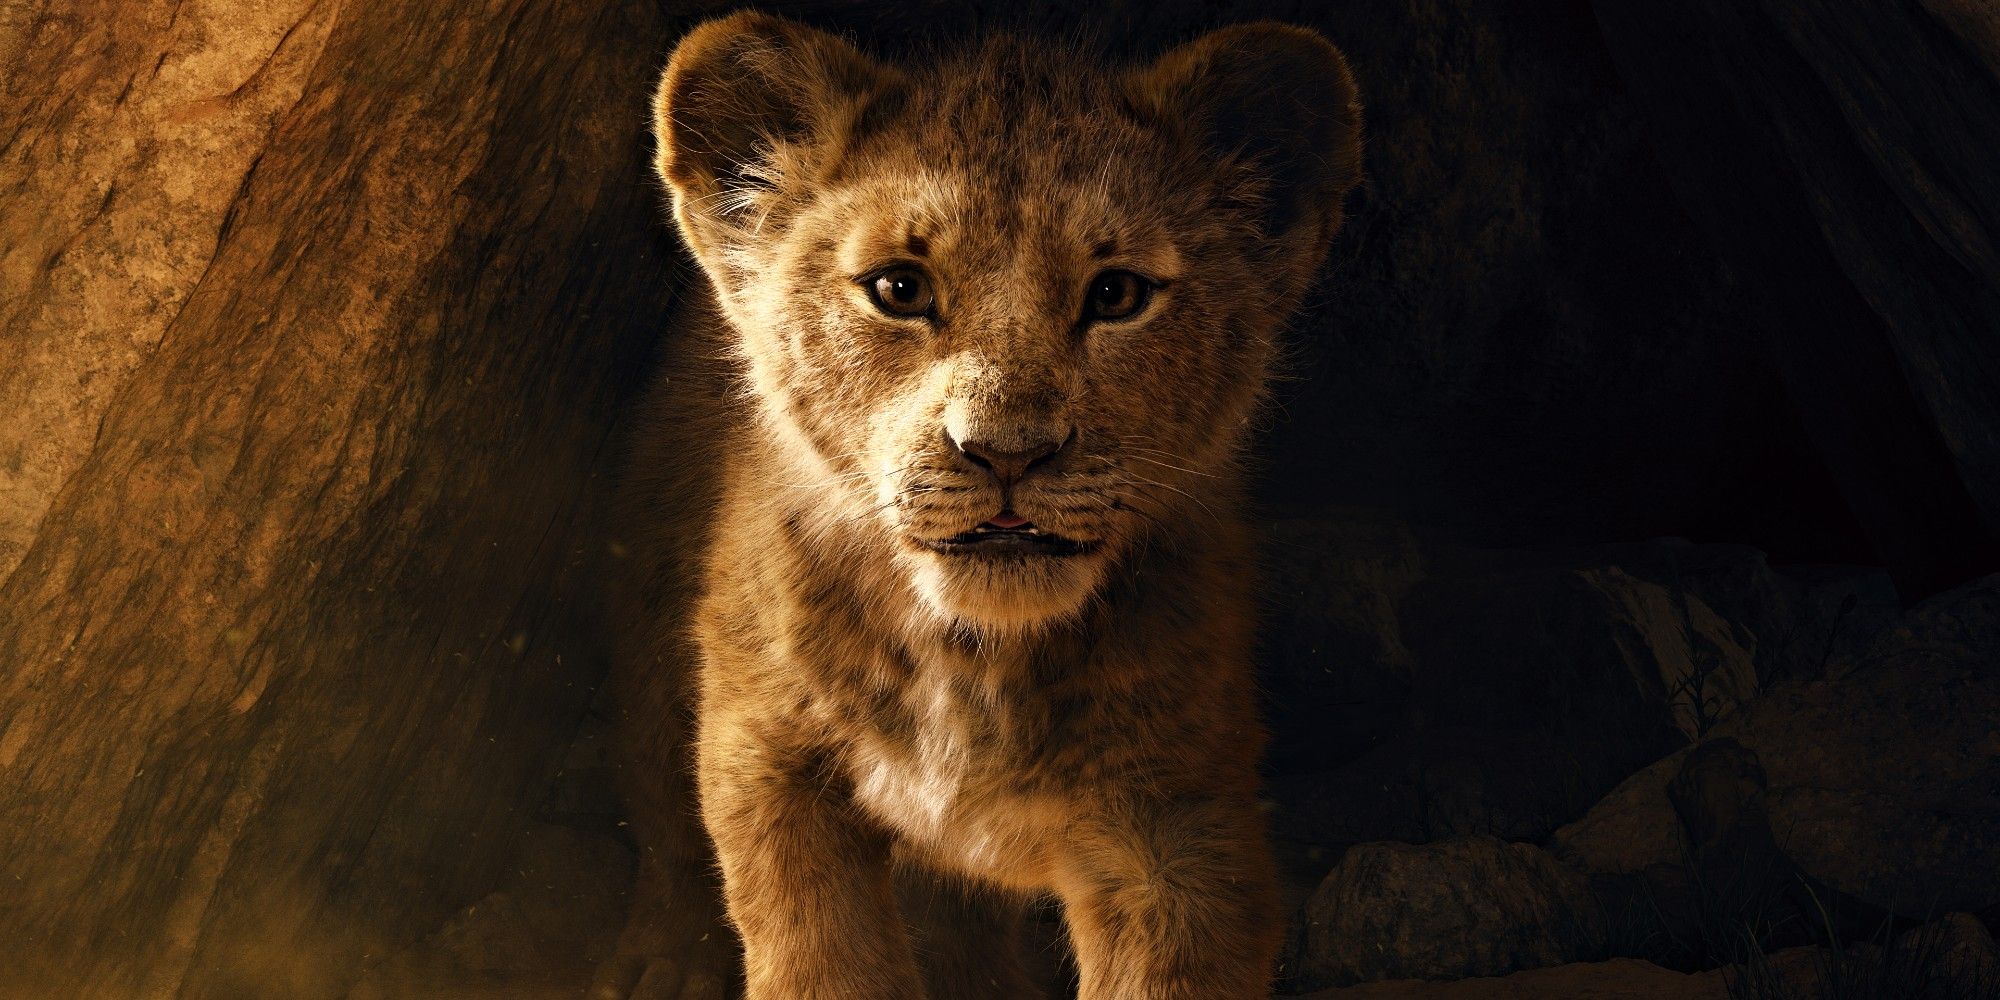 The Lion King 2019 Simba poster